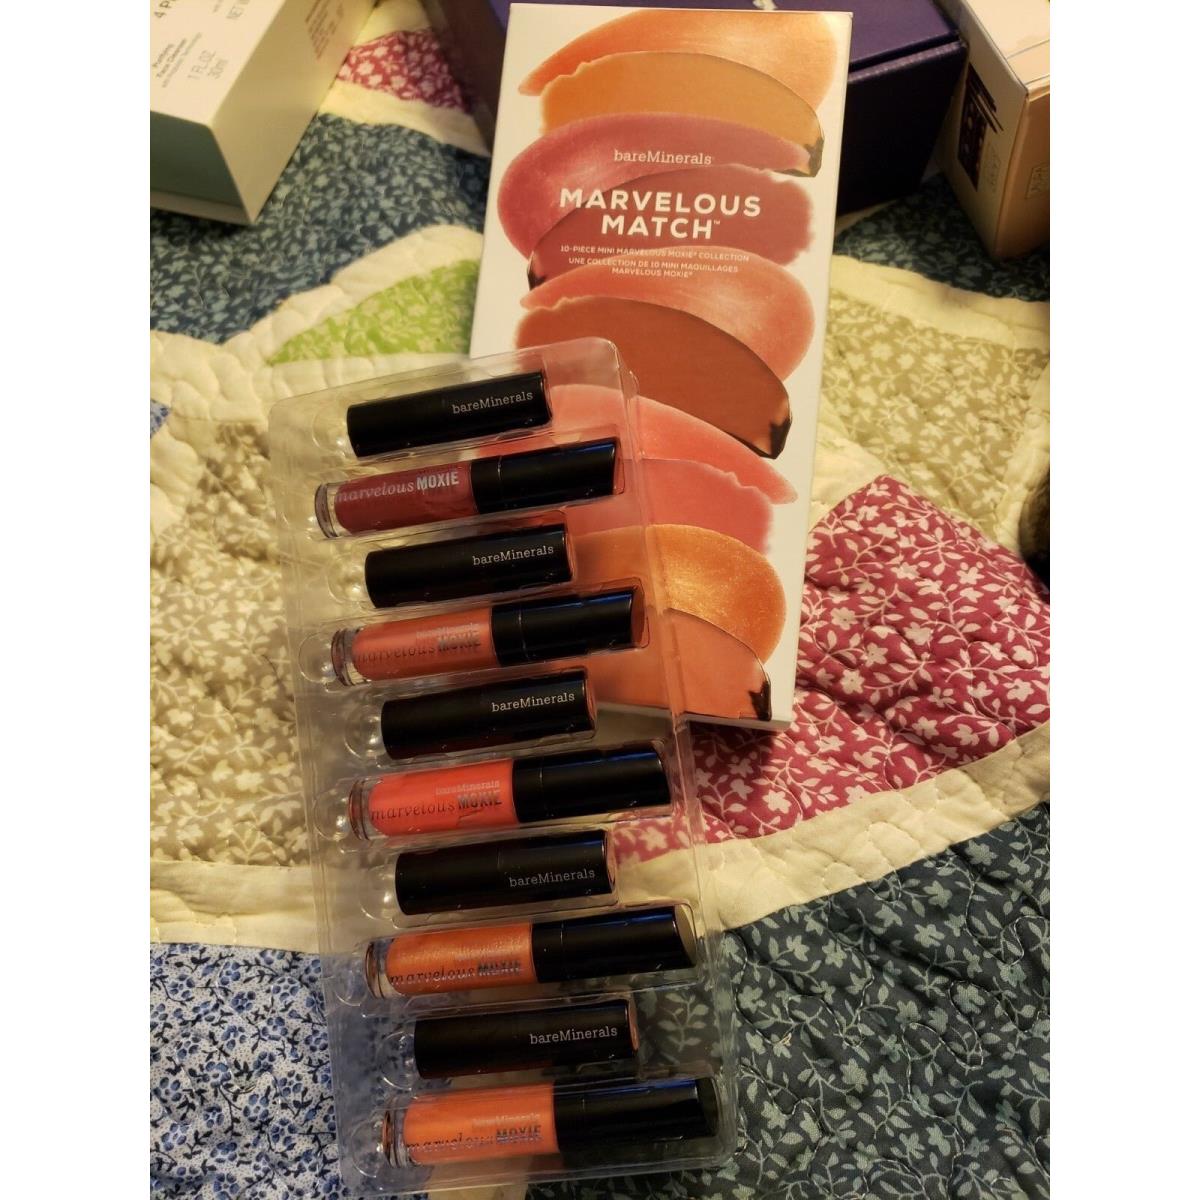 Bare Minerals 10 PC Marvelous Match Lip Gloss Glaze Set Collection Retail